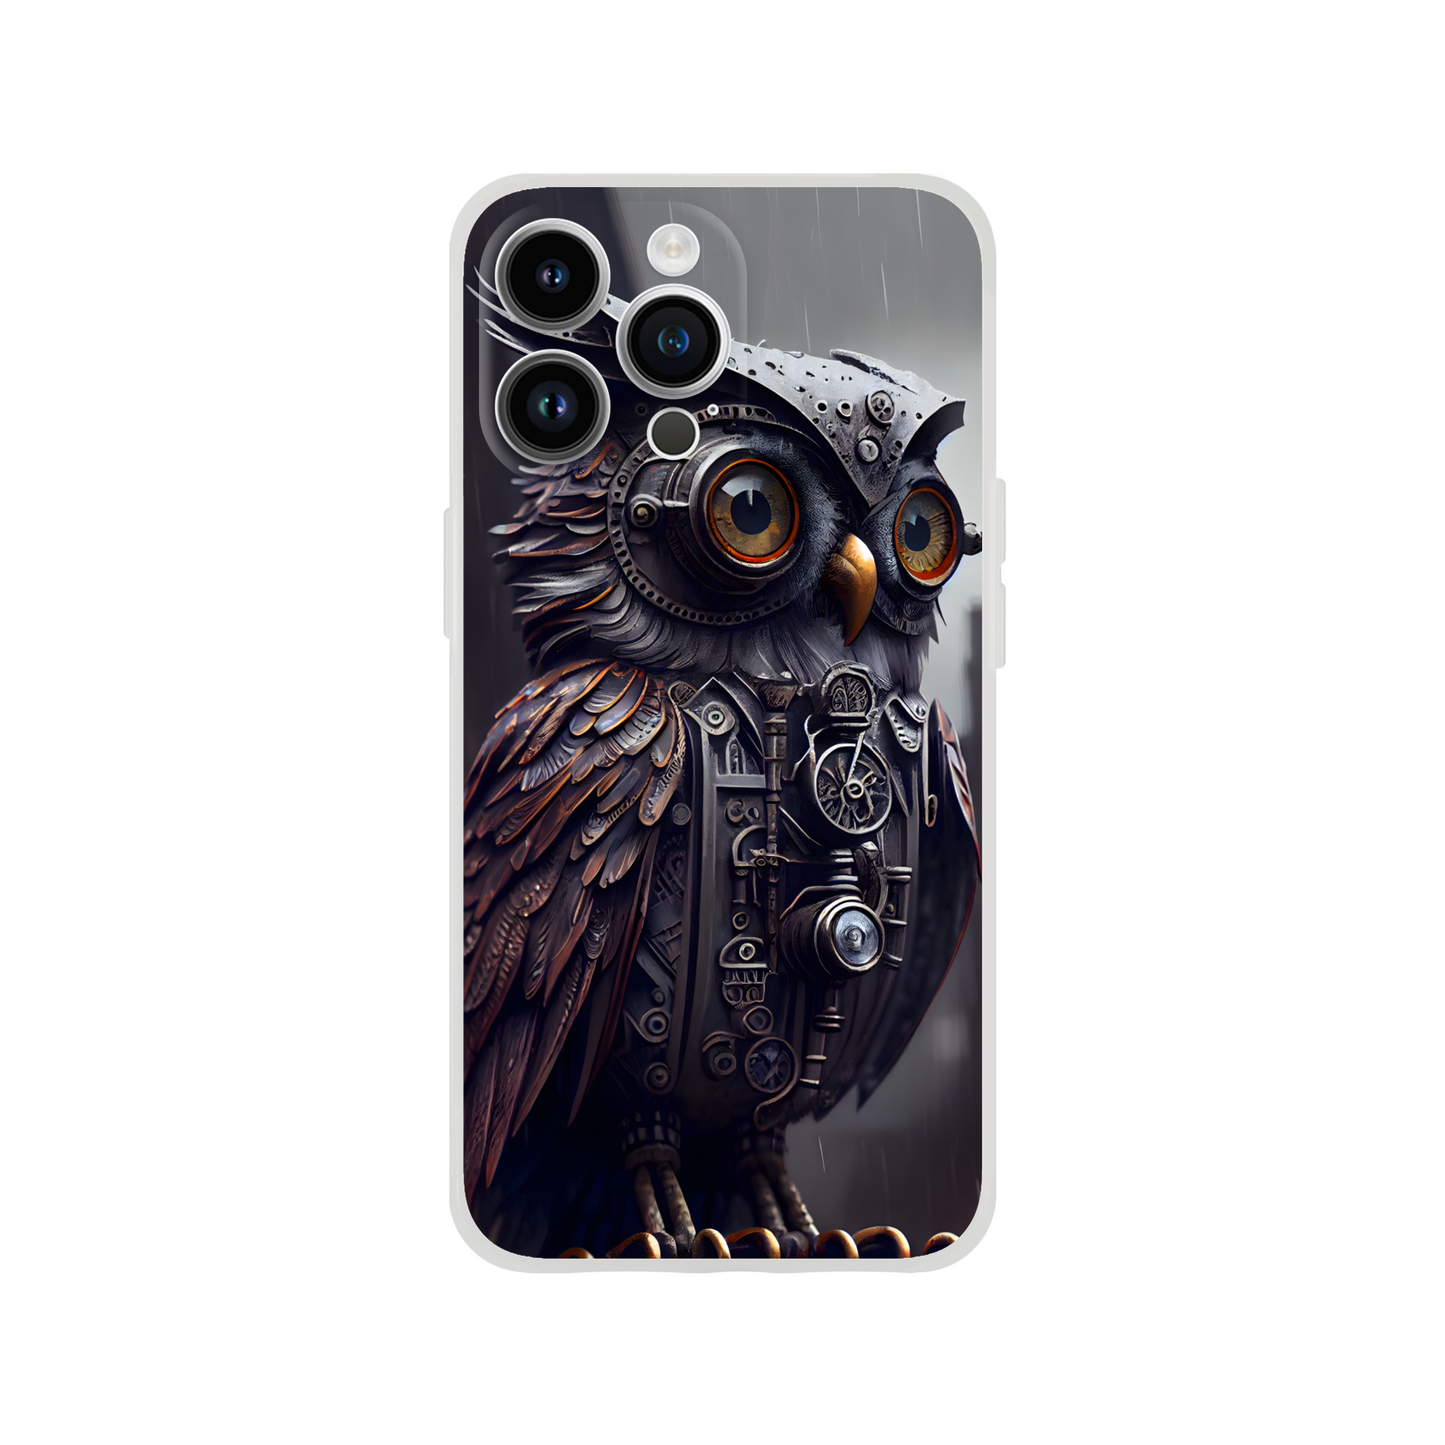 Steampunk owl - Flexi case